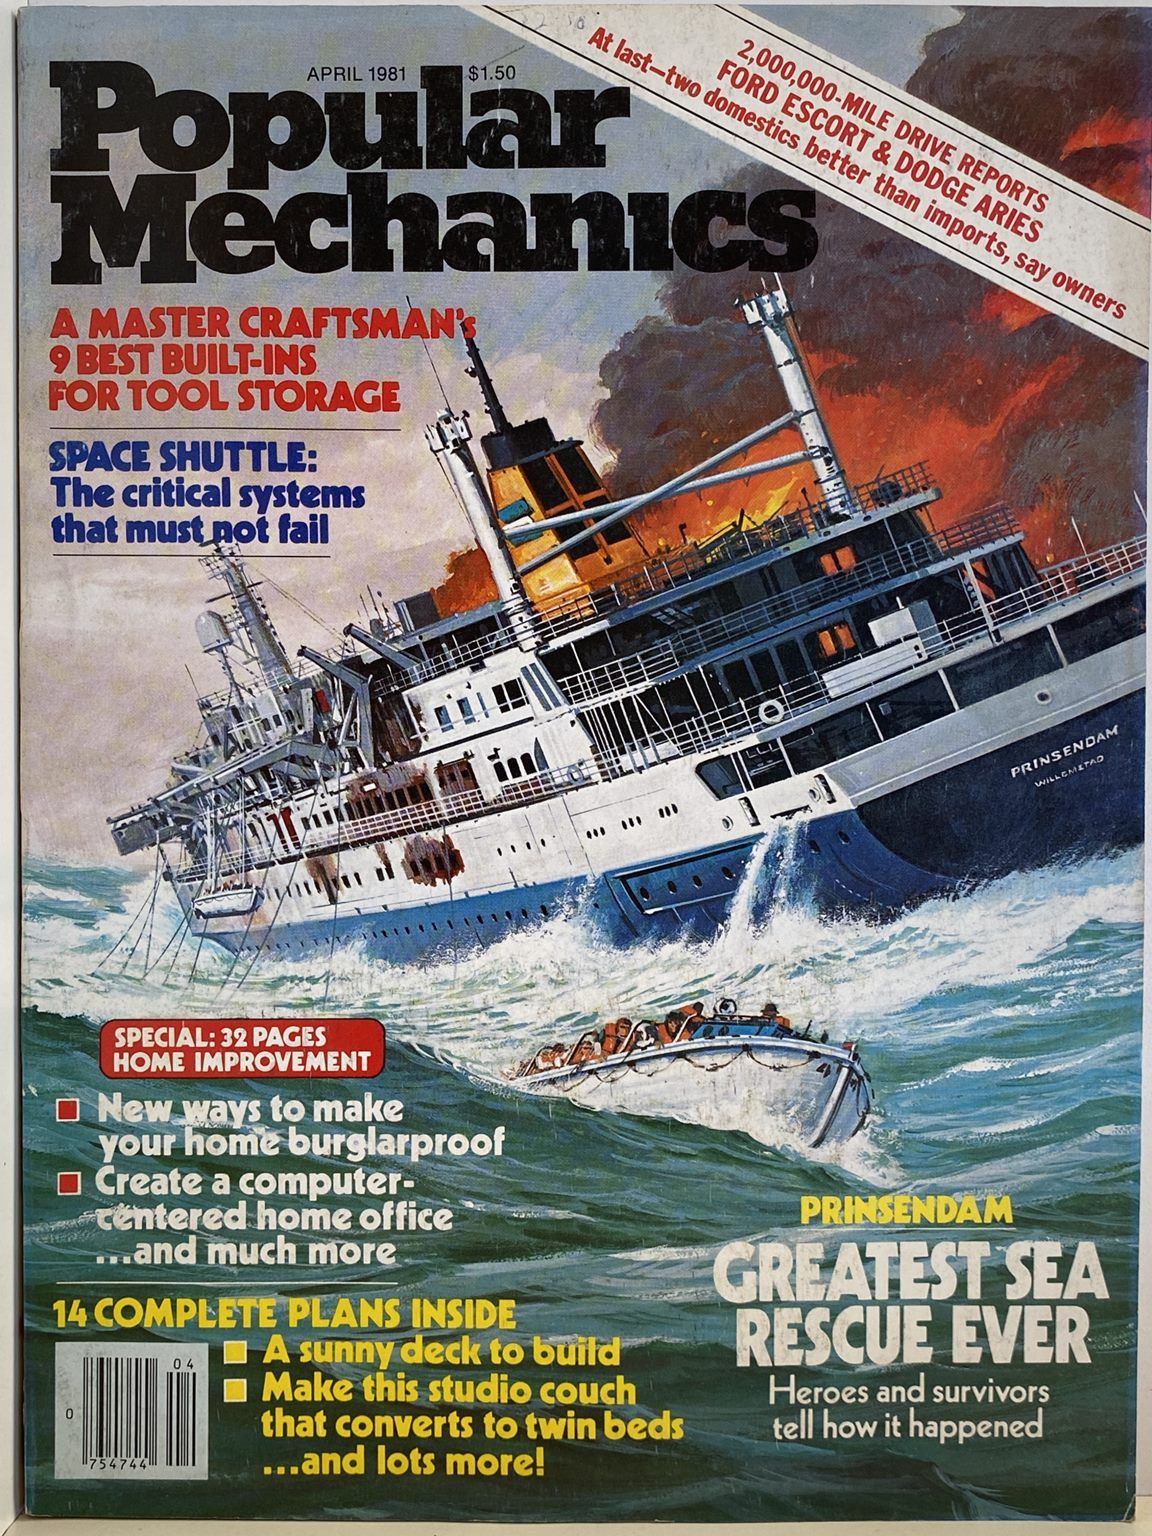 VINTAGE MAGAZINE: Popular Mechanics - Vol. 155, No. 4 - April 1981